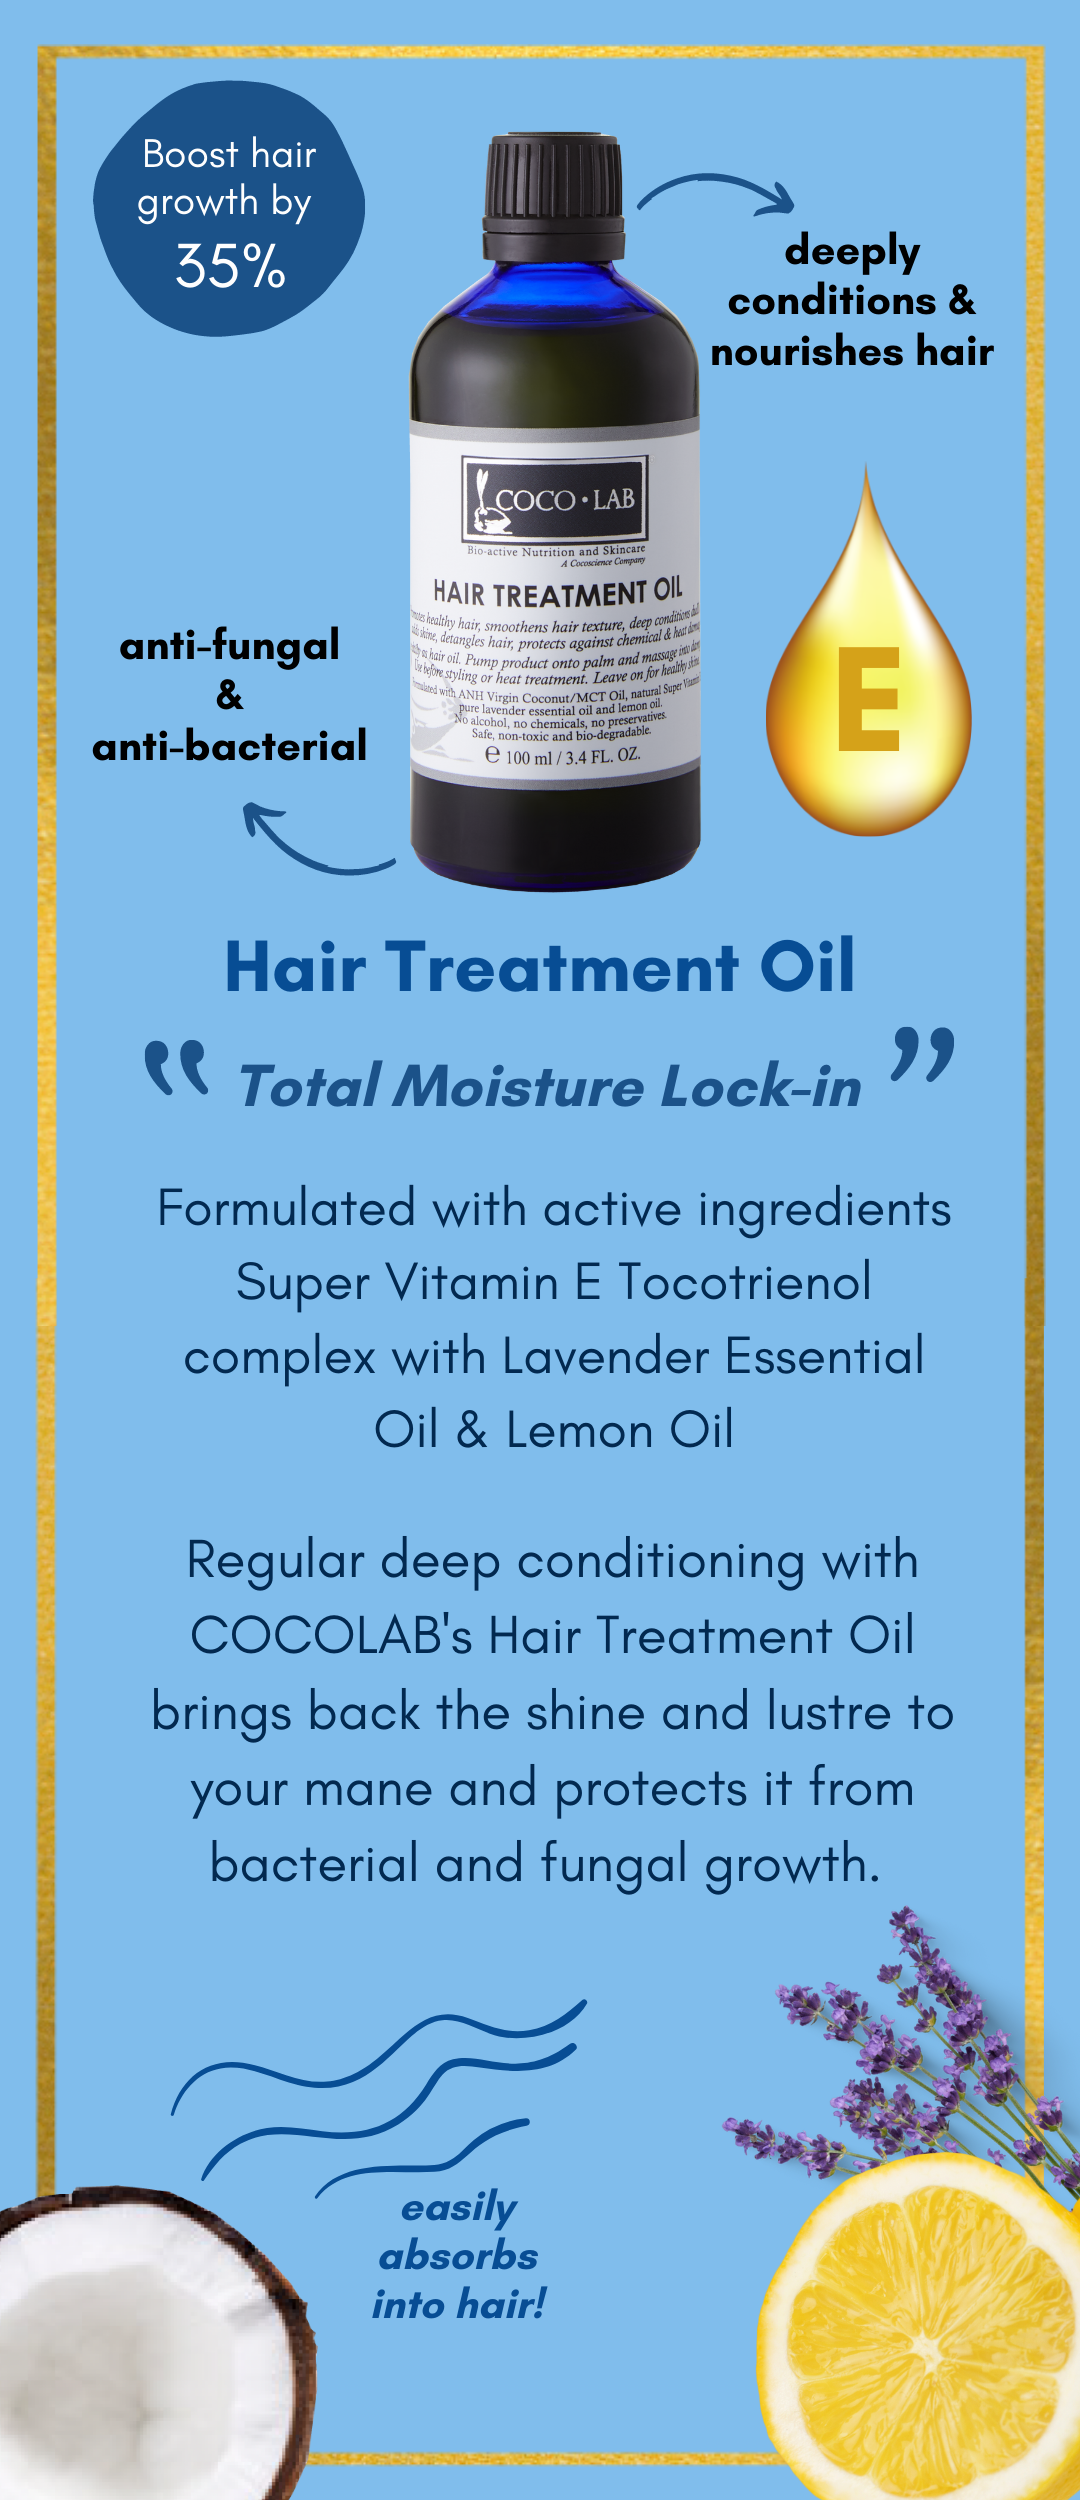 Hair Treatment Oil Description